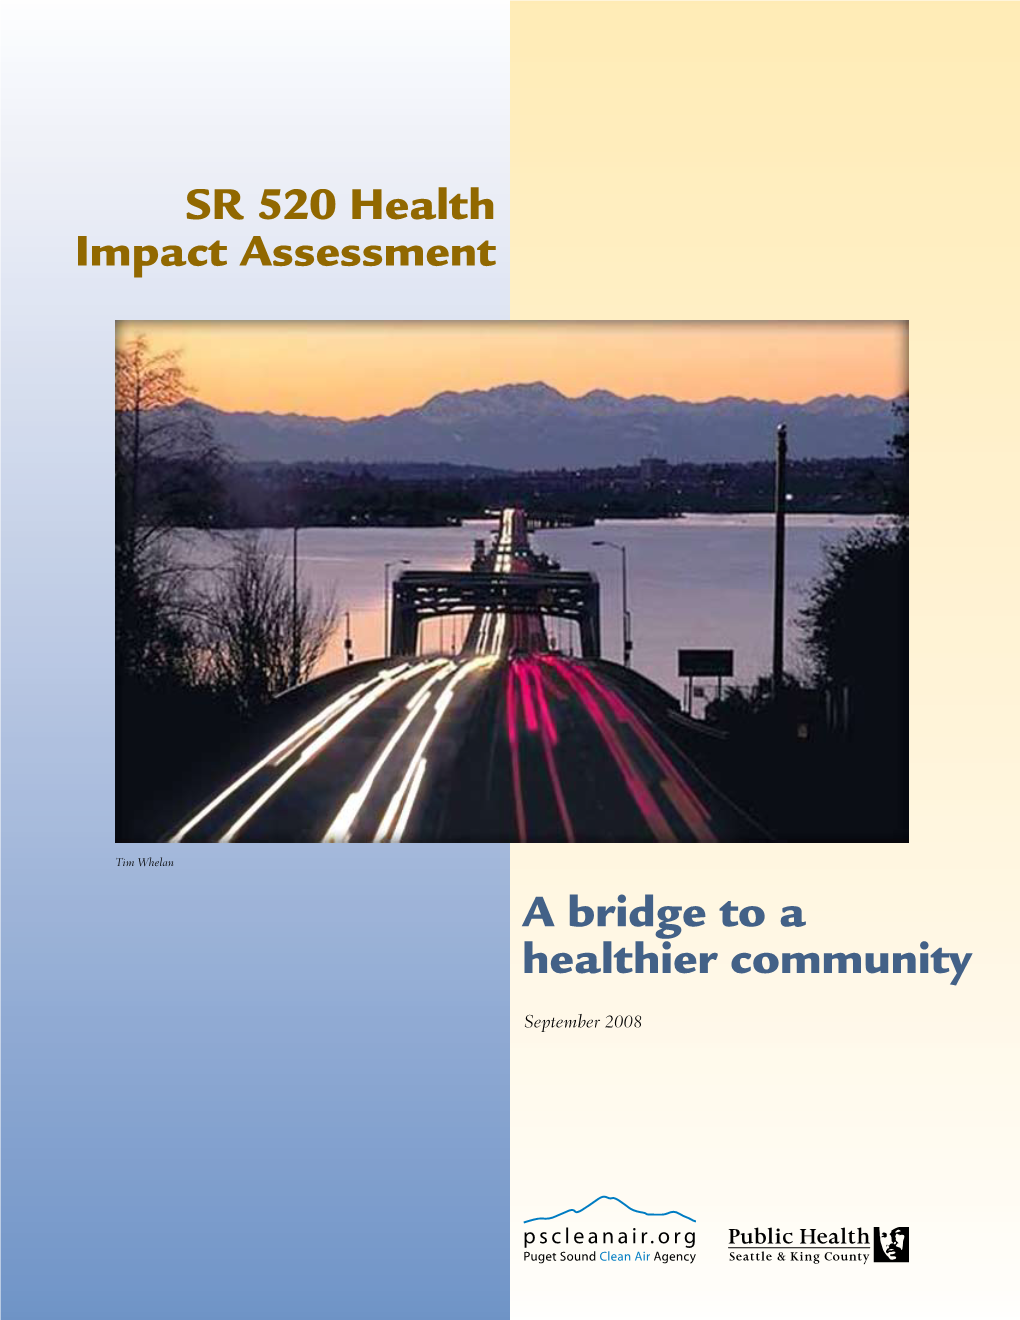 SR 520 Health Impact Assessment a Bridge to a Healthier Community